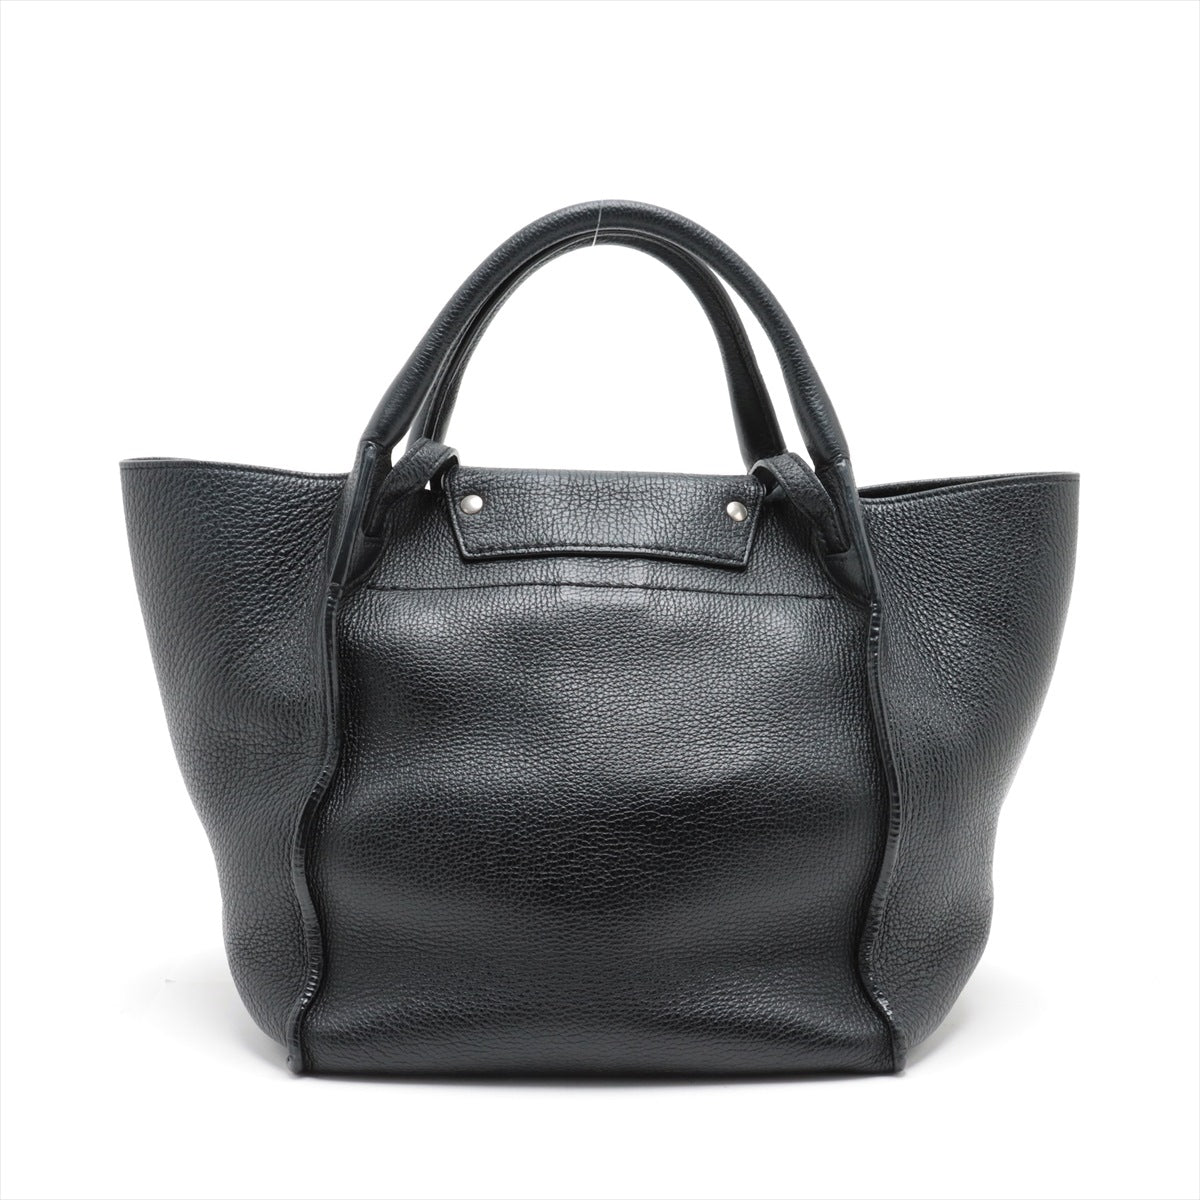 CELINE BIG BAG small Leather 2 way tote bag Black